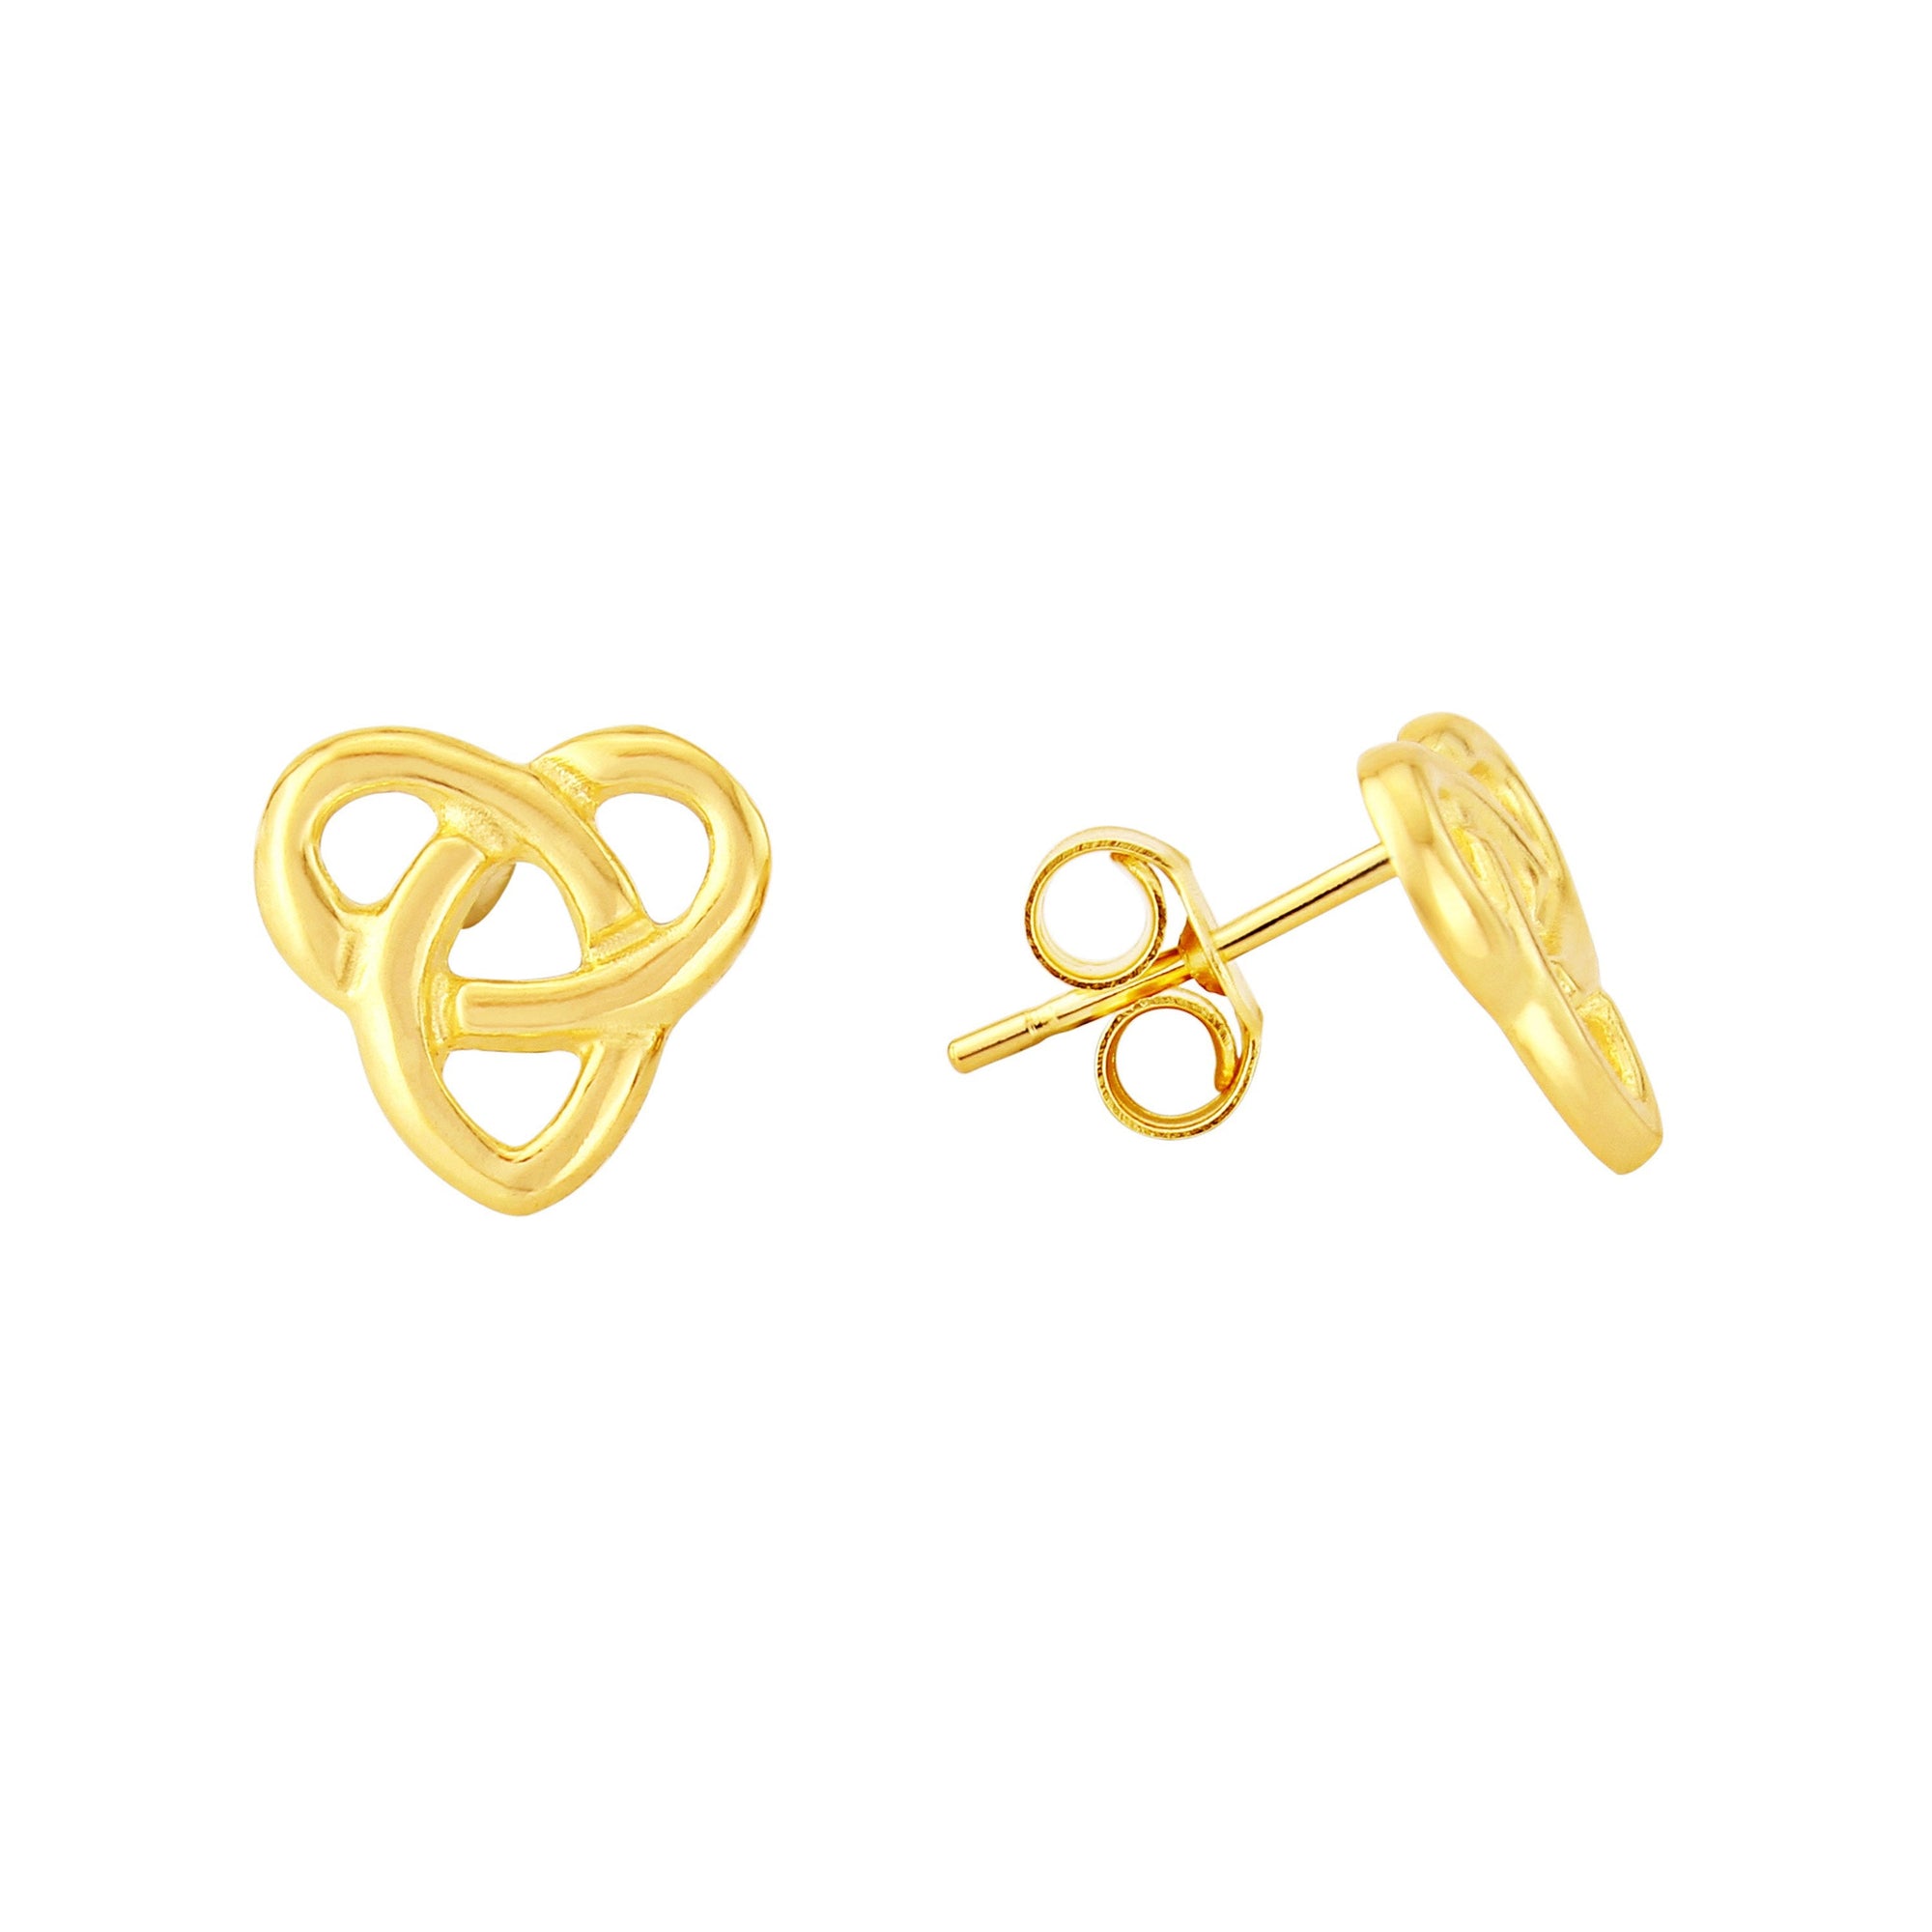 9ct gold celtic stud earrings